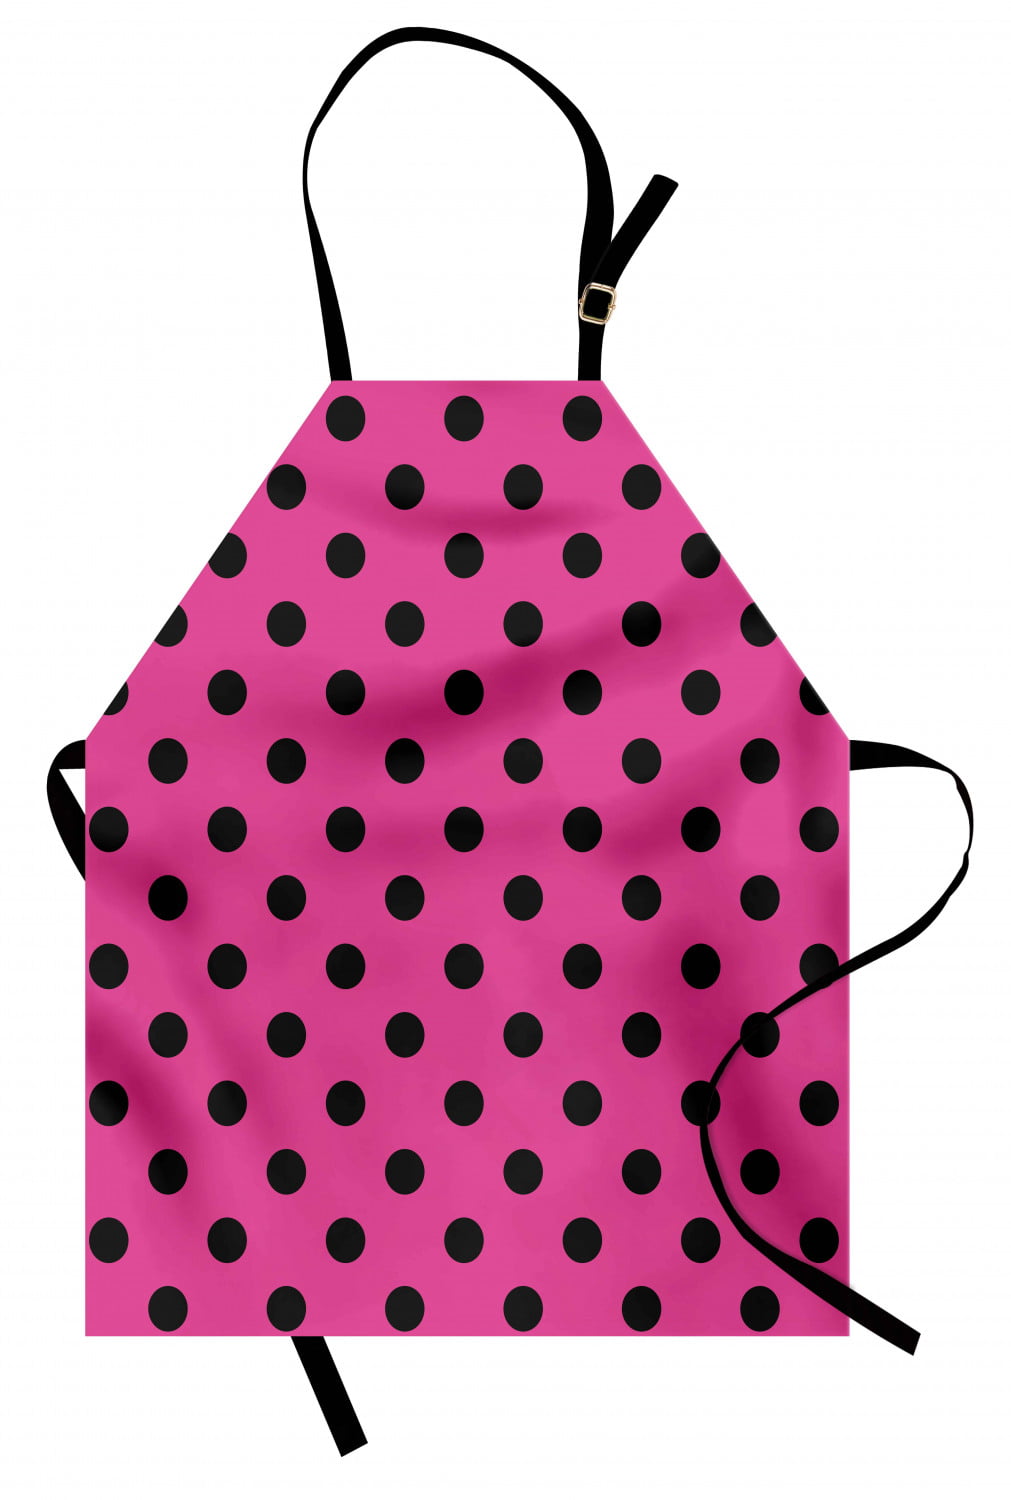 Hot Pink Apron Pop Art Inspired Design Retro Pattern of Black Polka ...